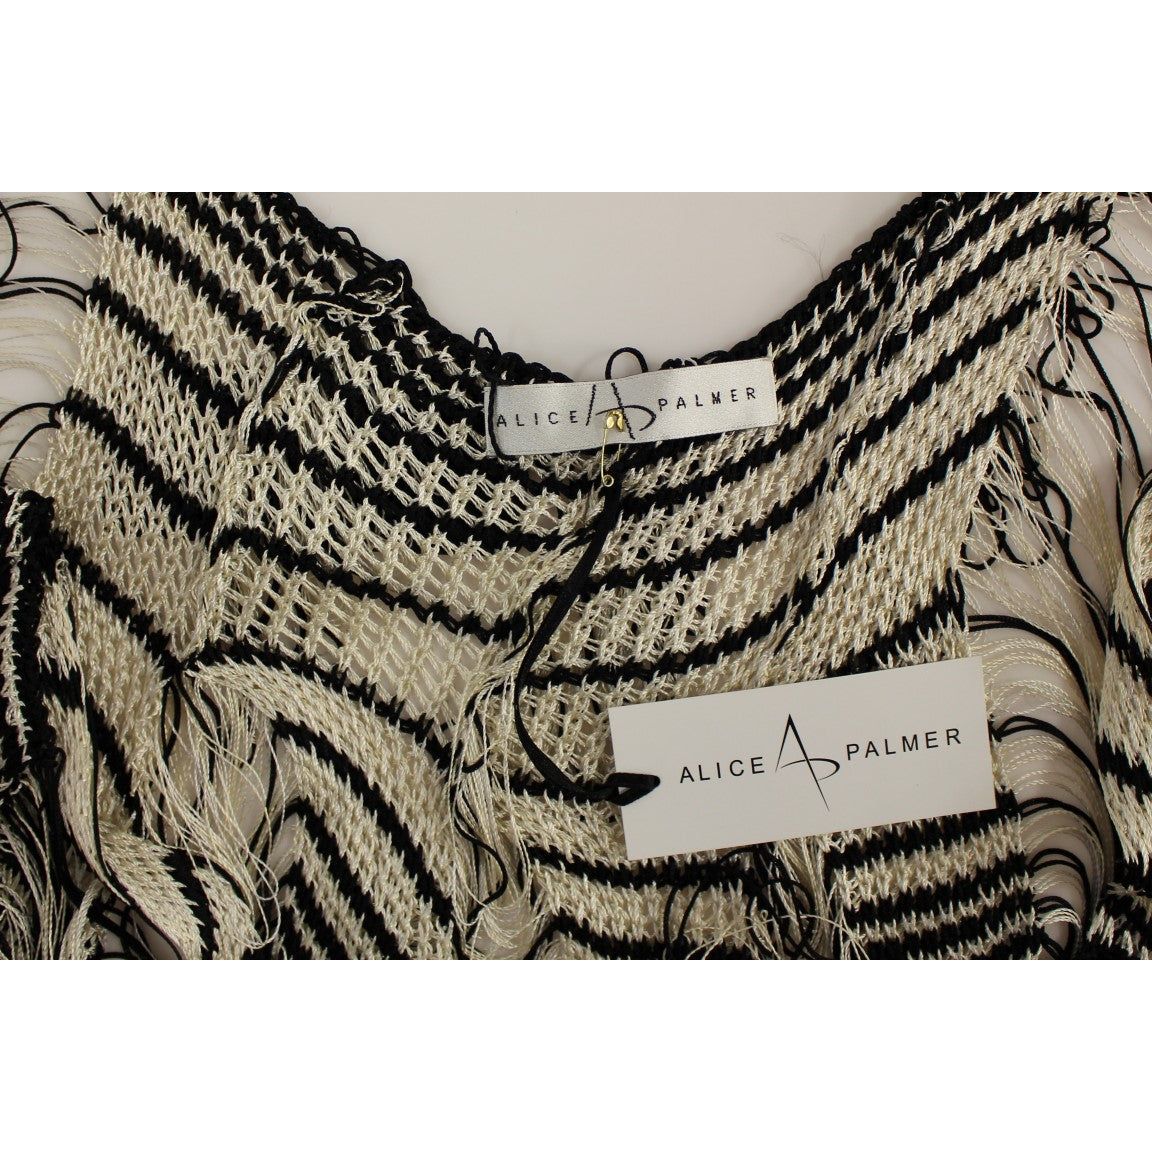 Alice Palmer Black and White Knitted Artisan Dress Dresses black-chainette-knit-striped-assymetrical-dress 219175-black-chainette-knit-striped-assymetrical-dress-3.jpg